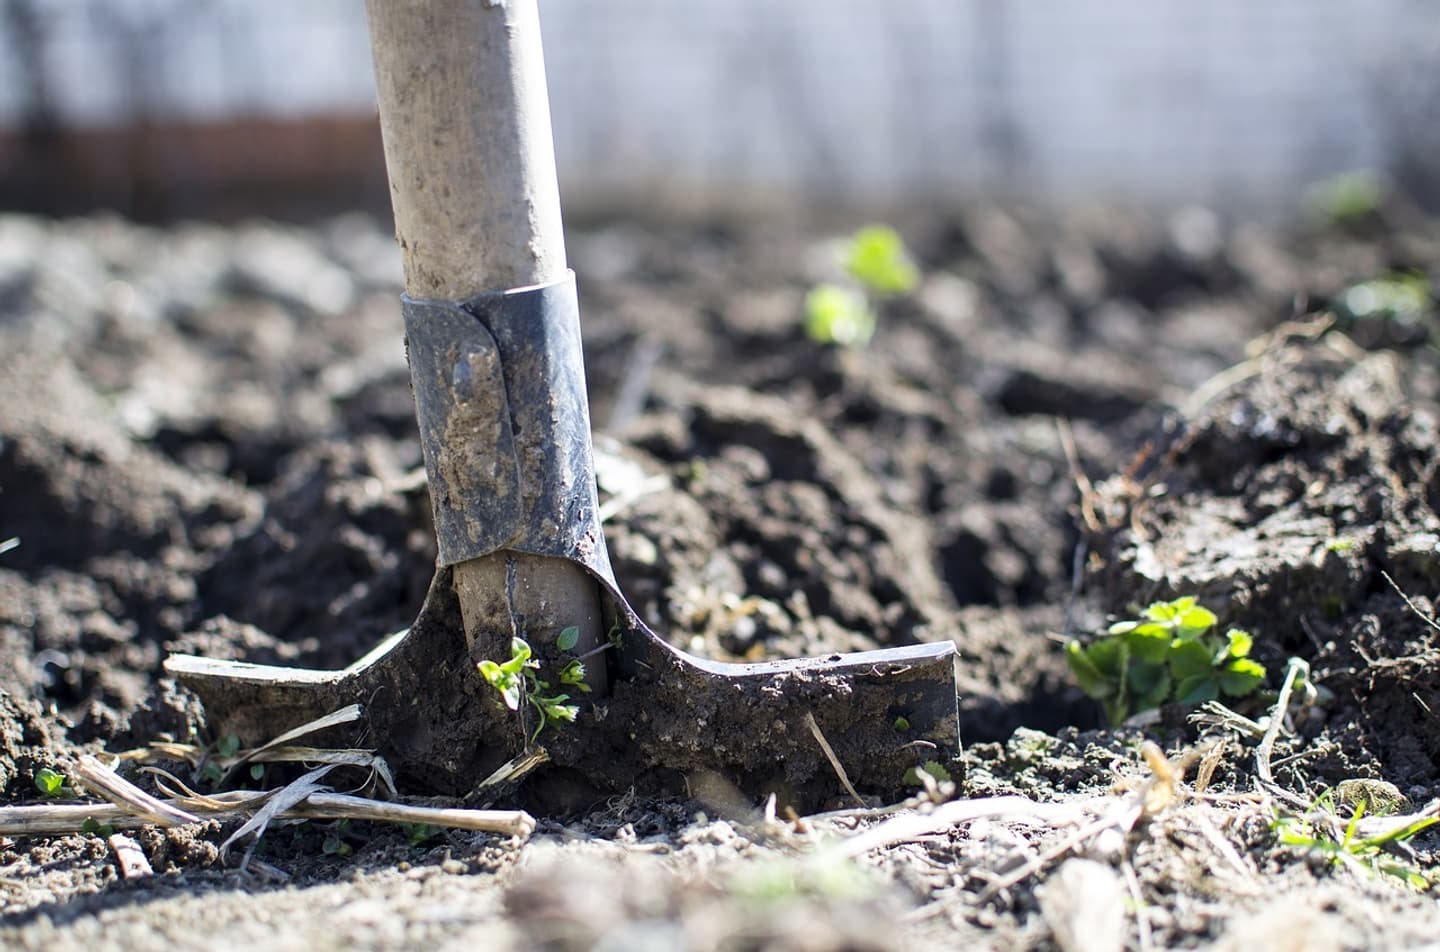 Spade dig plant hole soil